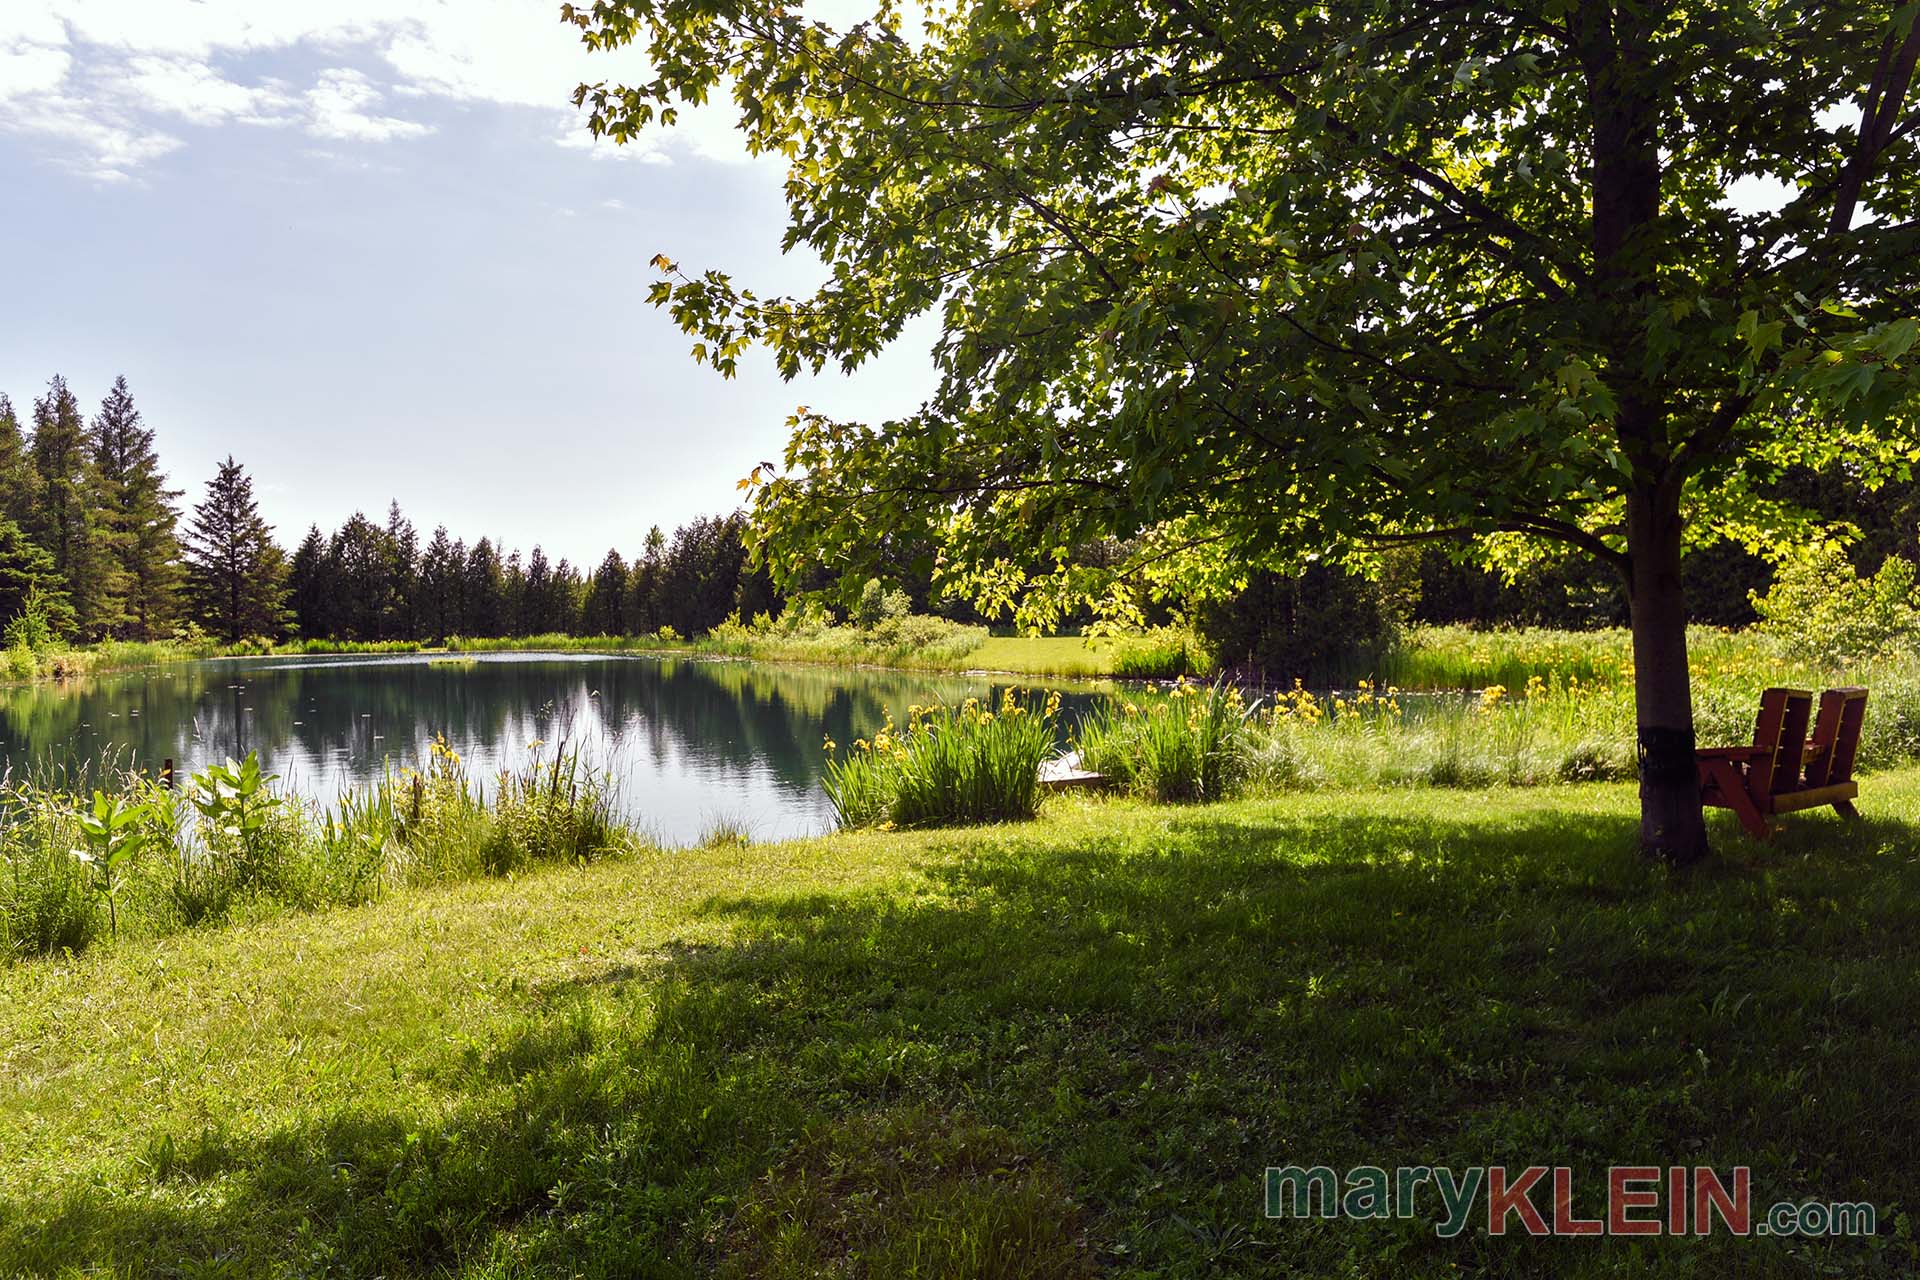 Maple Tree, Overlooking Pond